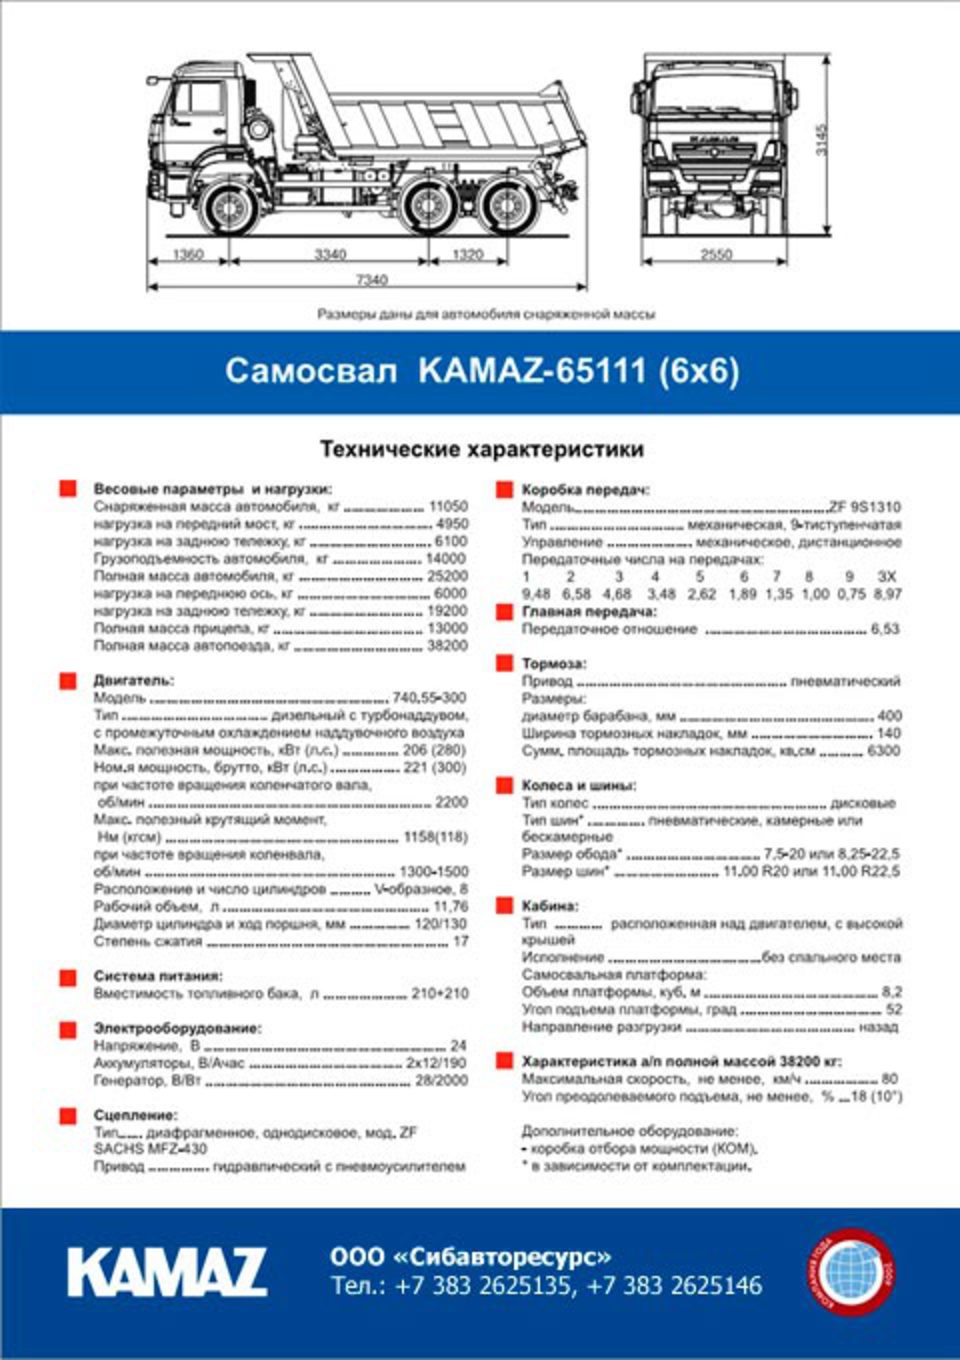 Какой вес камаза. ТТХ КАМАЗ 6520. КАМАЗ-6460 седельный тягач габариты. КАМАЗ 65222 самосвал ТТХ. КАМАЗ 65111 самосвал технические характеристики.